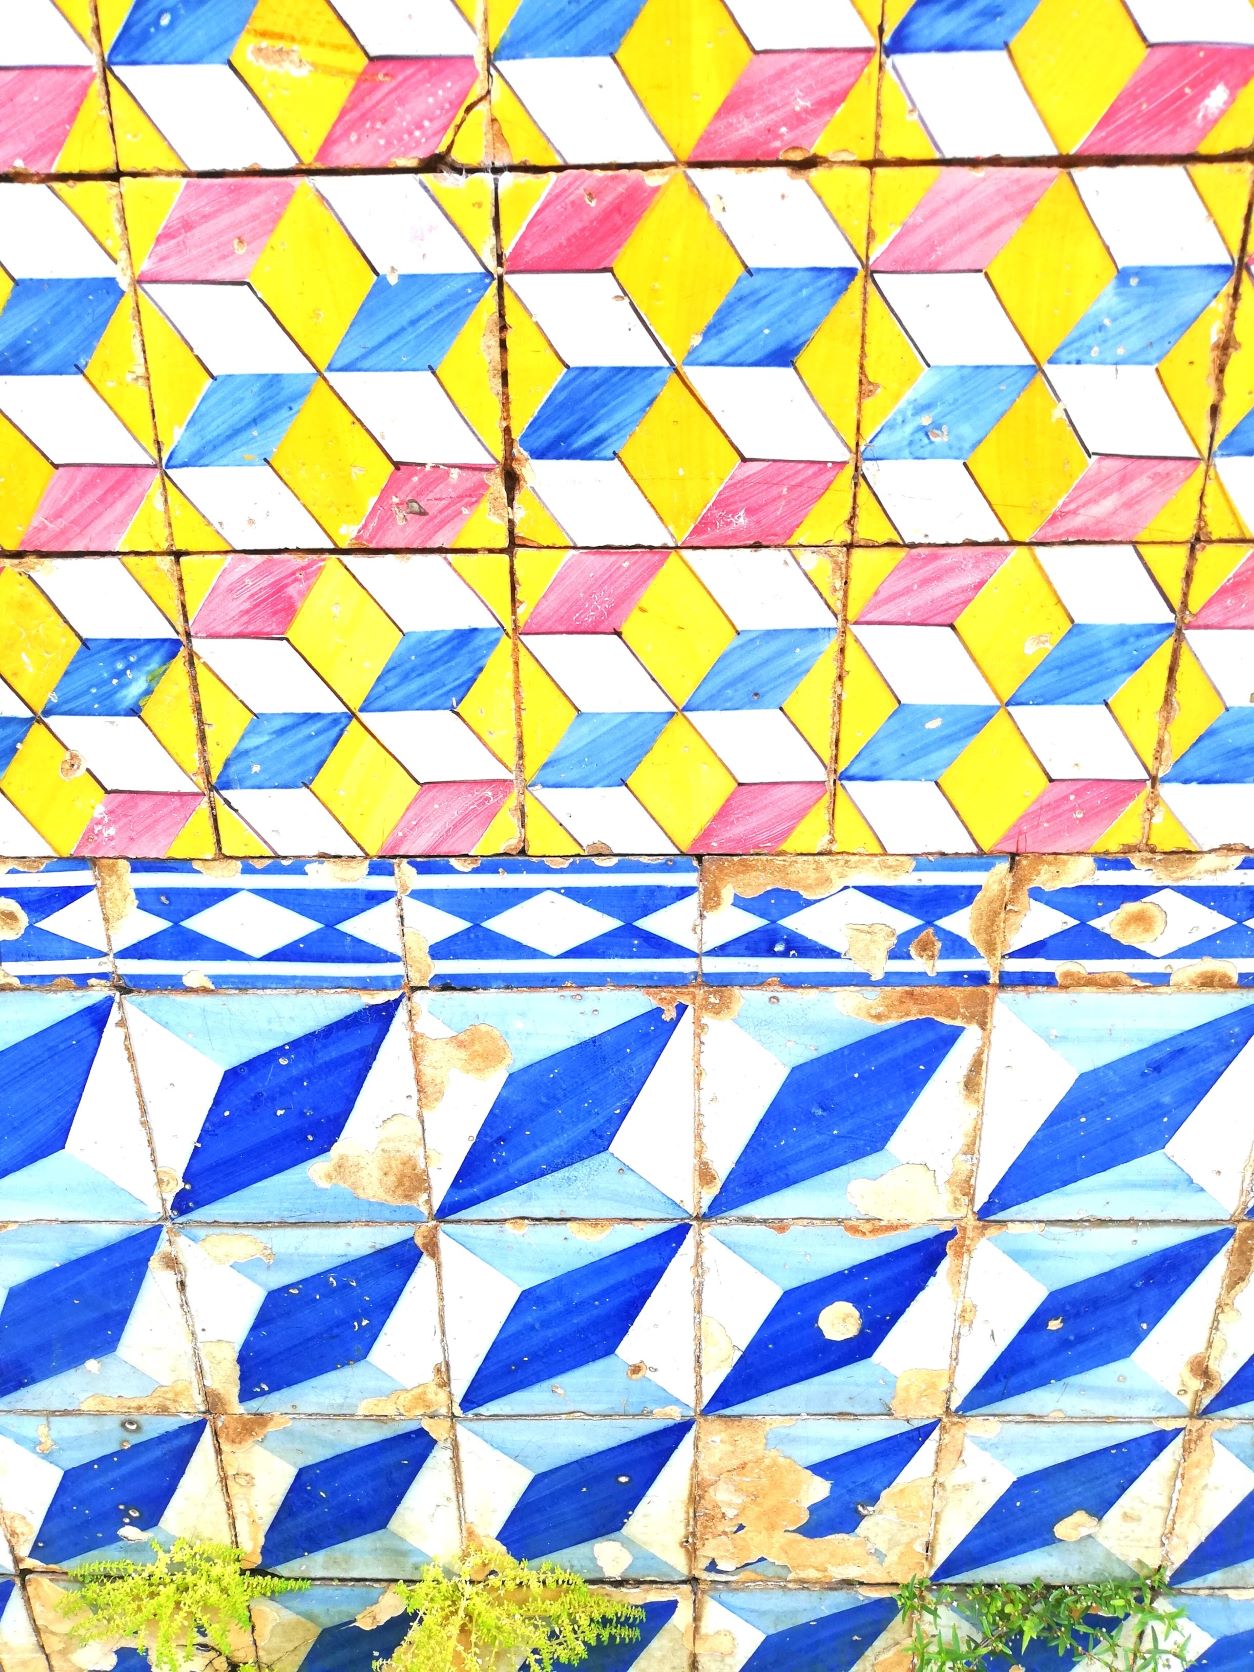 azulejos